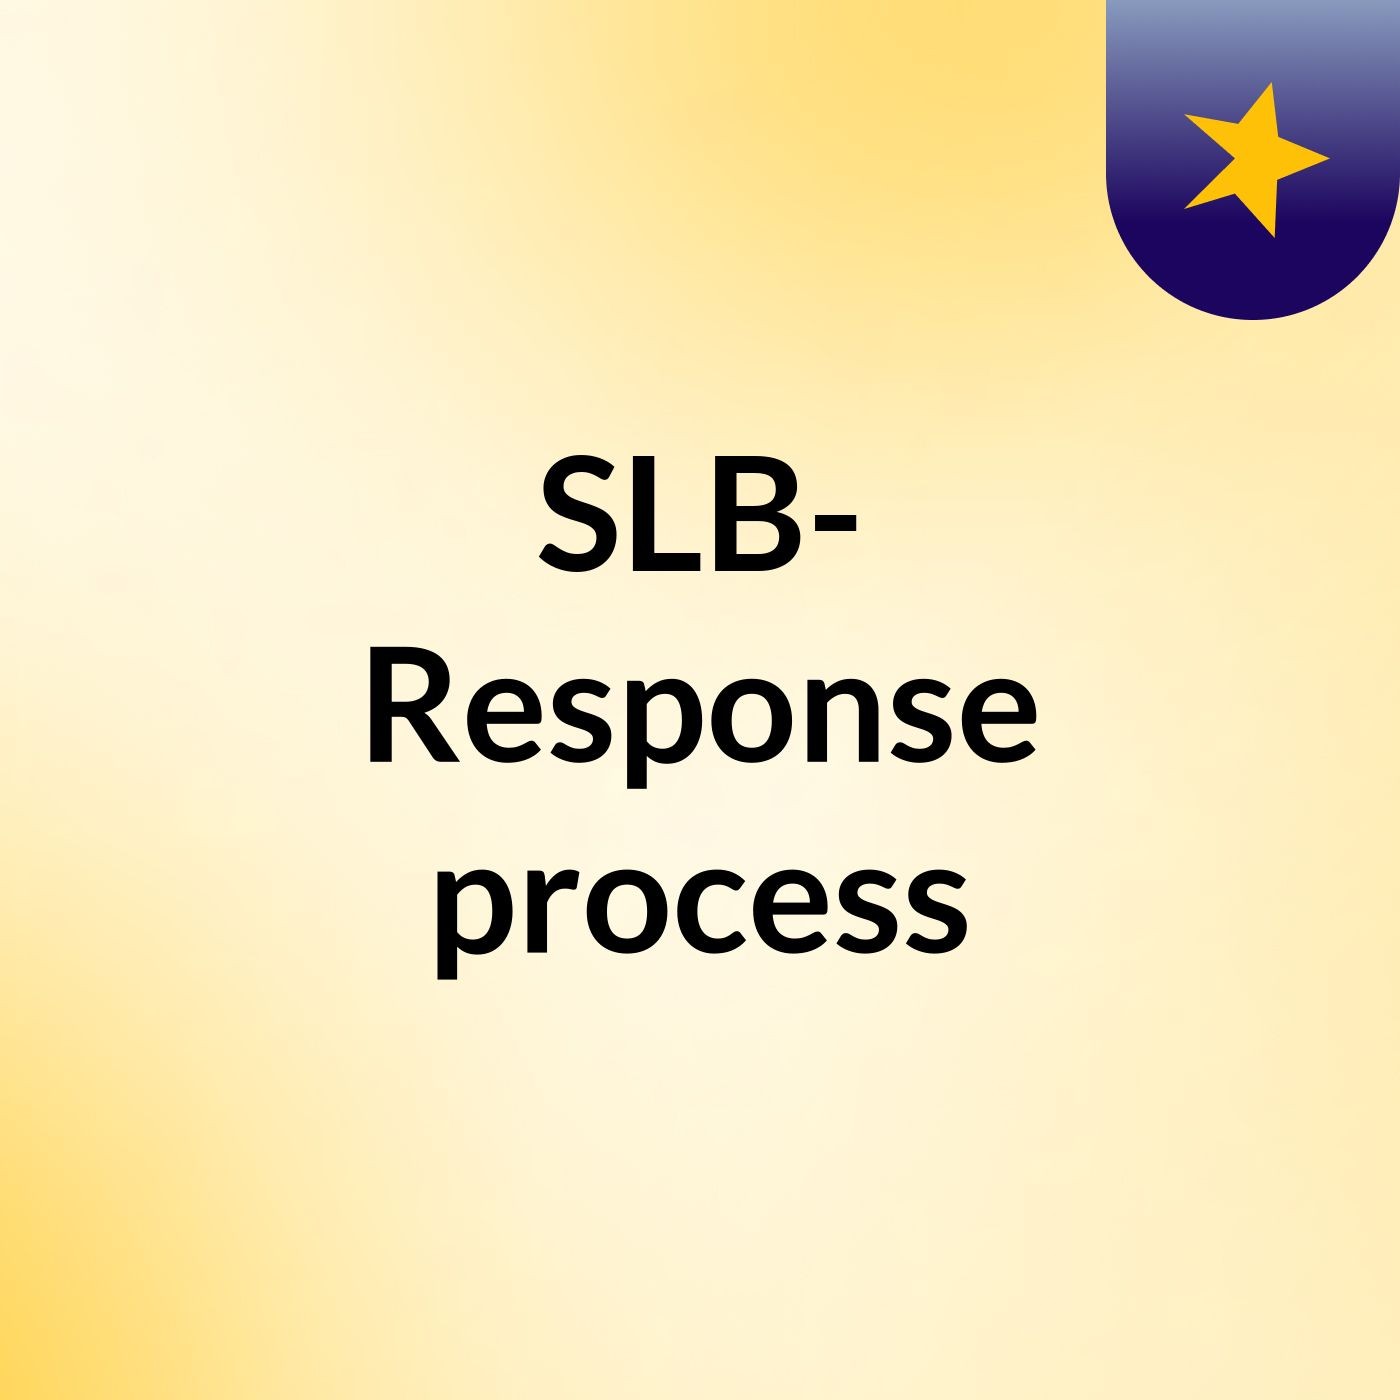 SLB- Response process